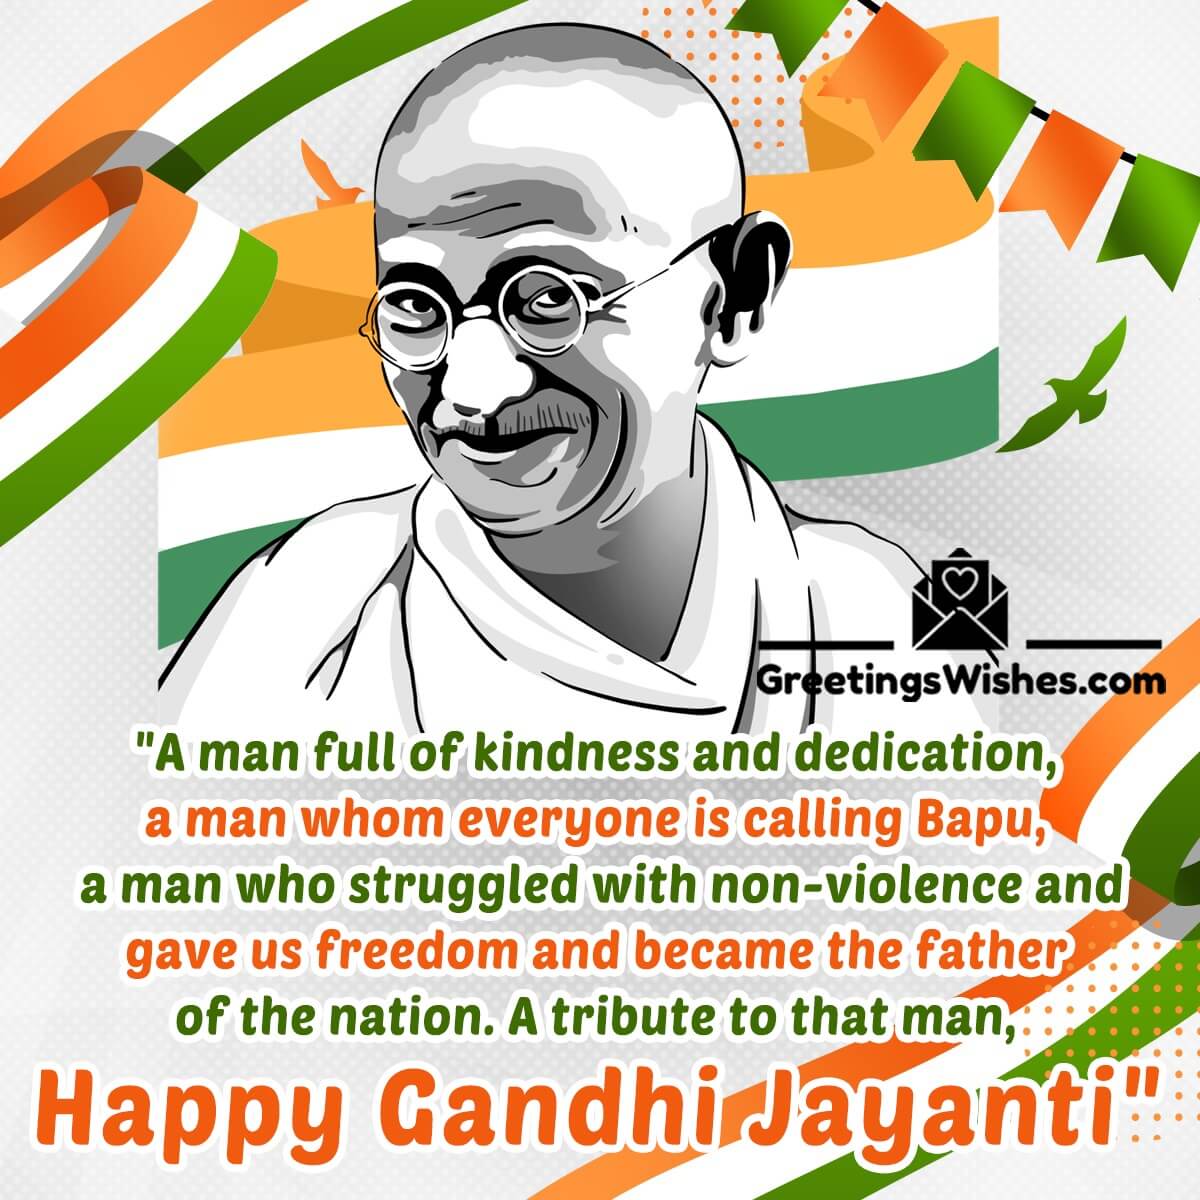 Gandhi Jayanti Wishes Messages (2 October)